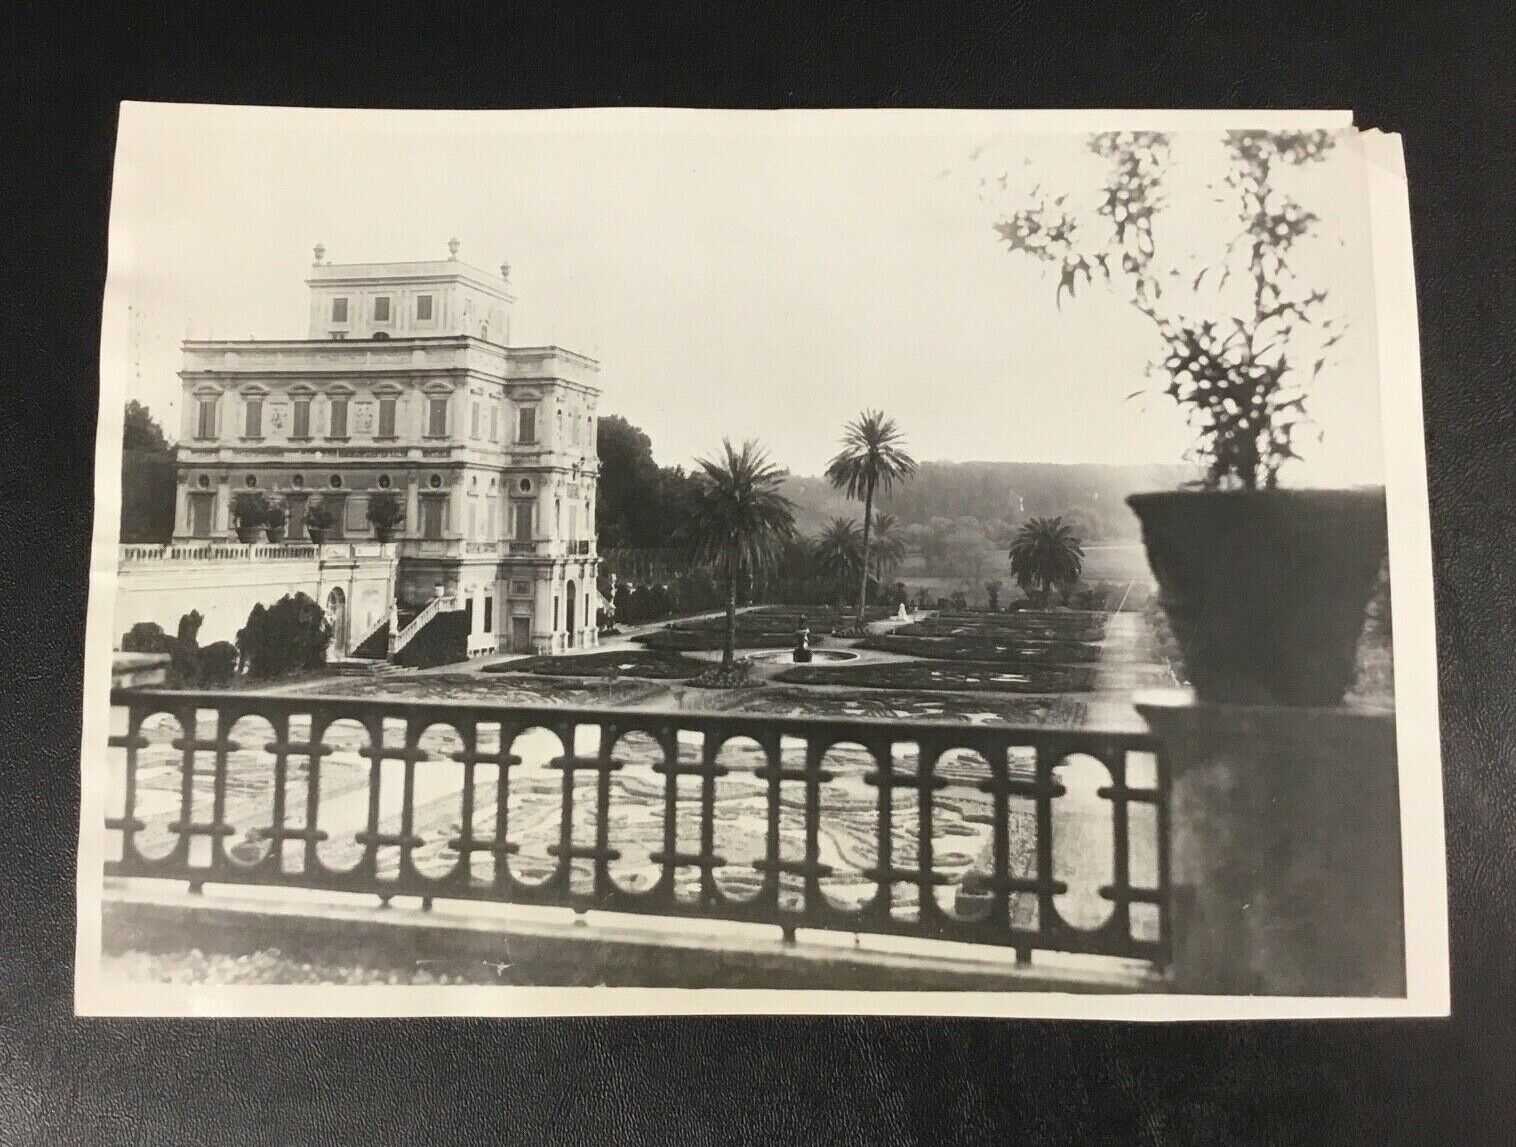 Original 1929 Press Photo Villa Doria Pamphili Rome Italy Vatican City Gardens